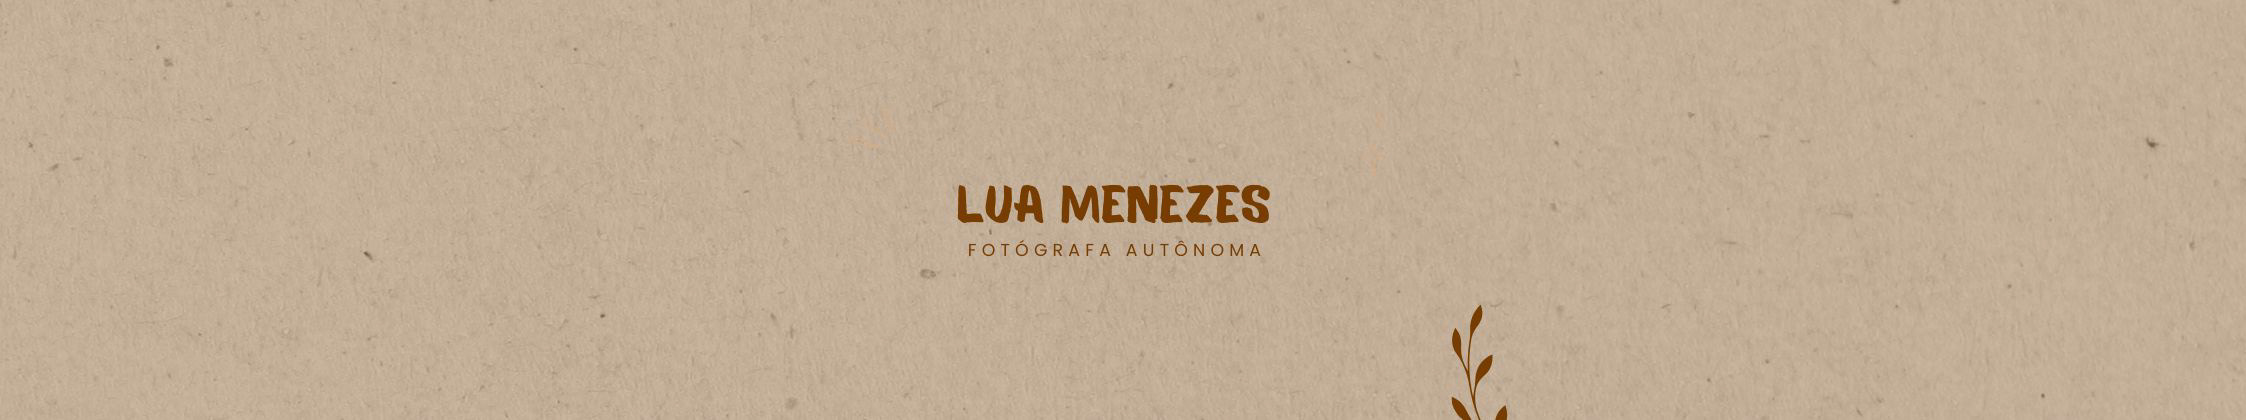 Banner de perfil de Lua Menezes